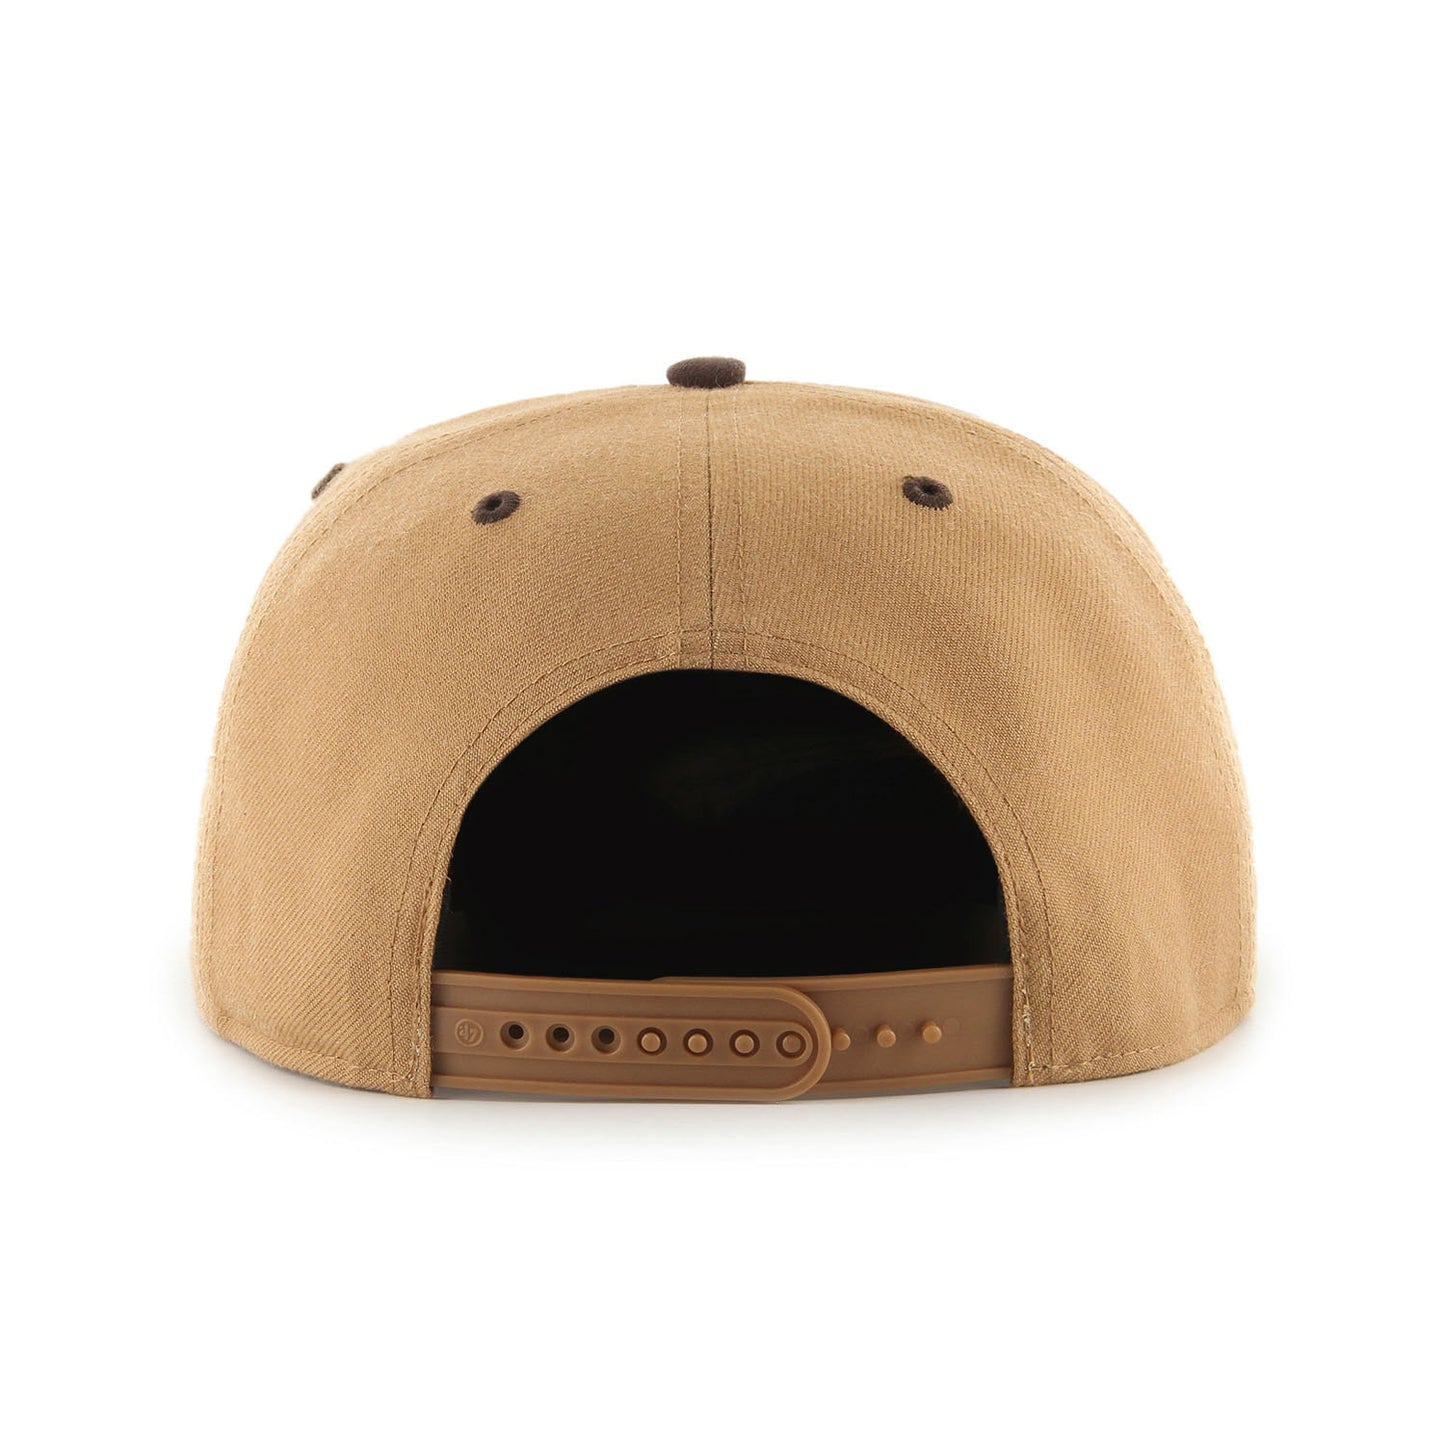 STLHD Steelhide Brown/Khaki Snapback Hat : : Sporting Goods